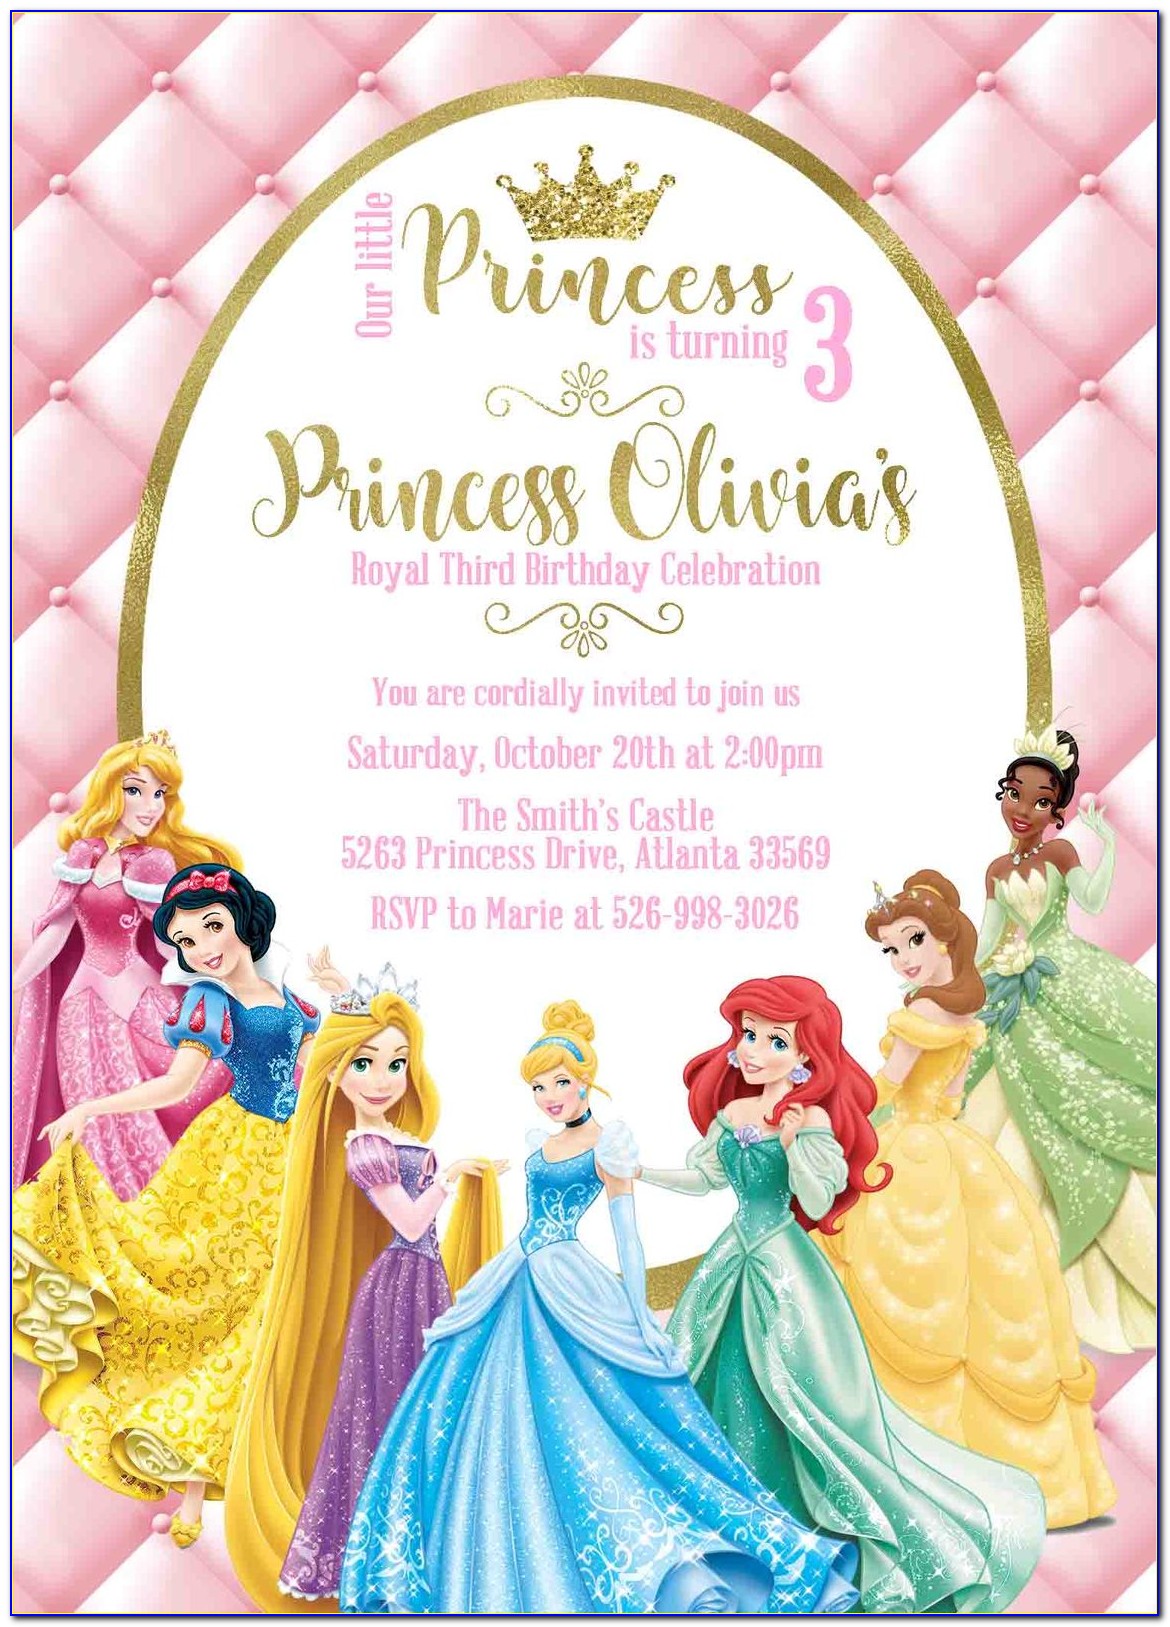 Personalized Princess Invitations